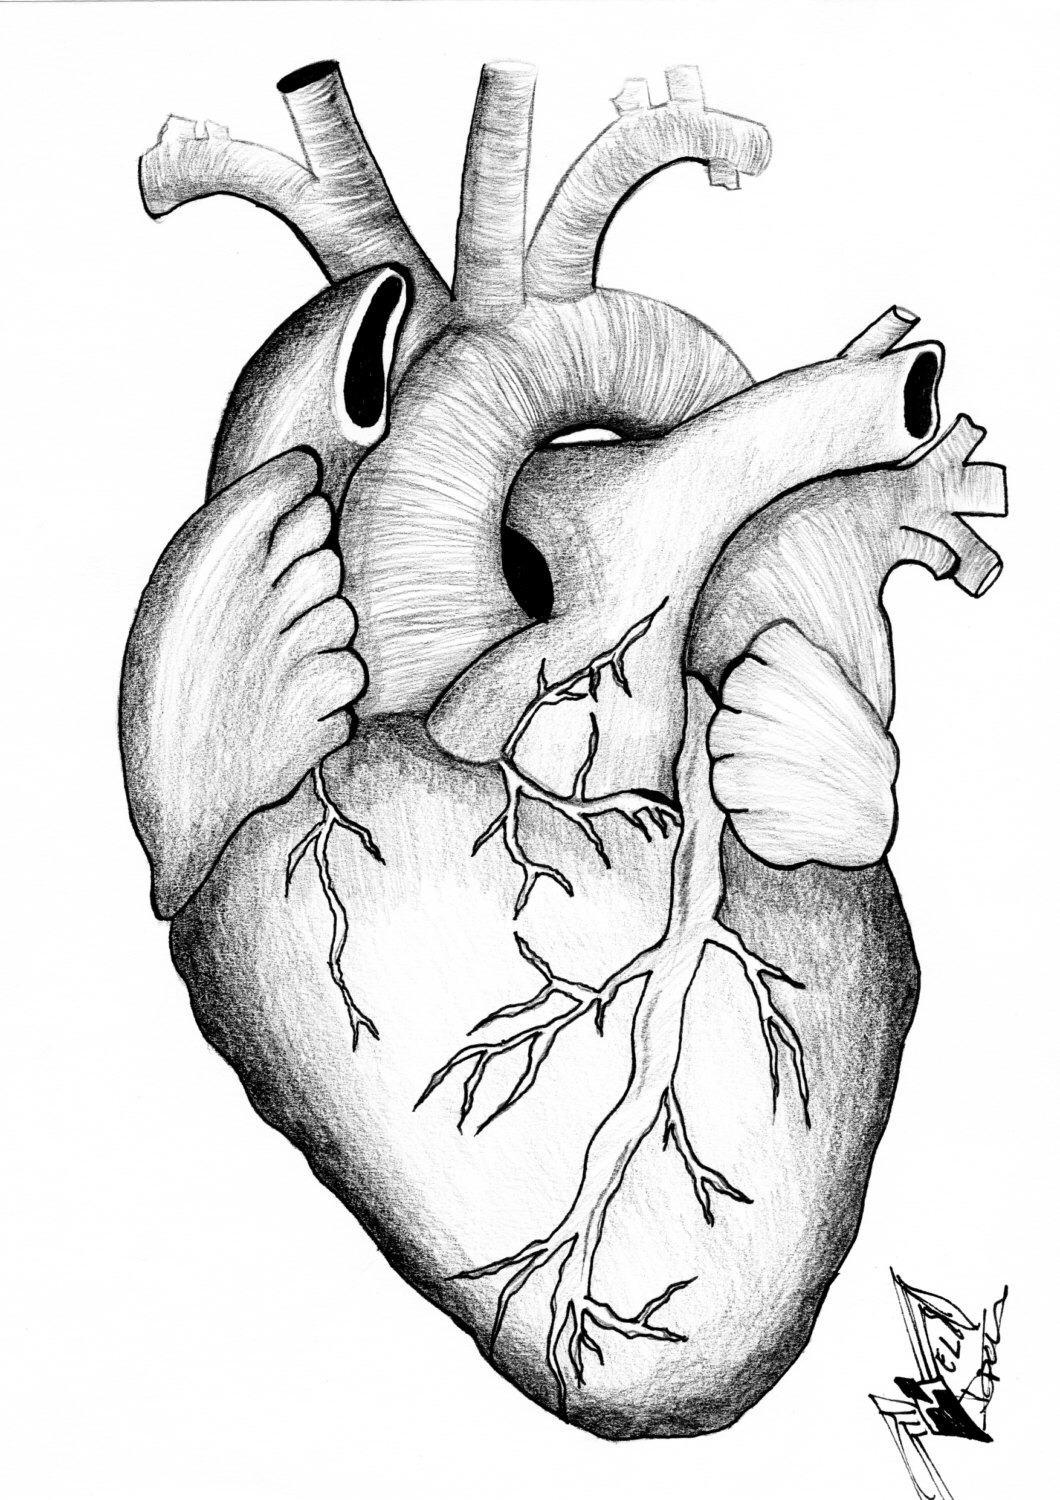 Human Heart Drawing Stunning Sketch